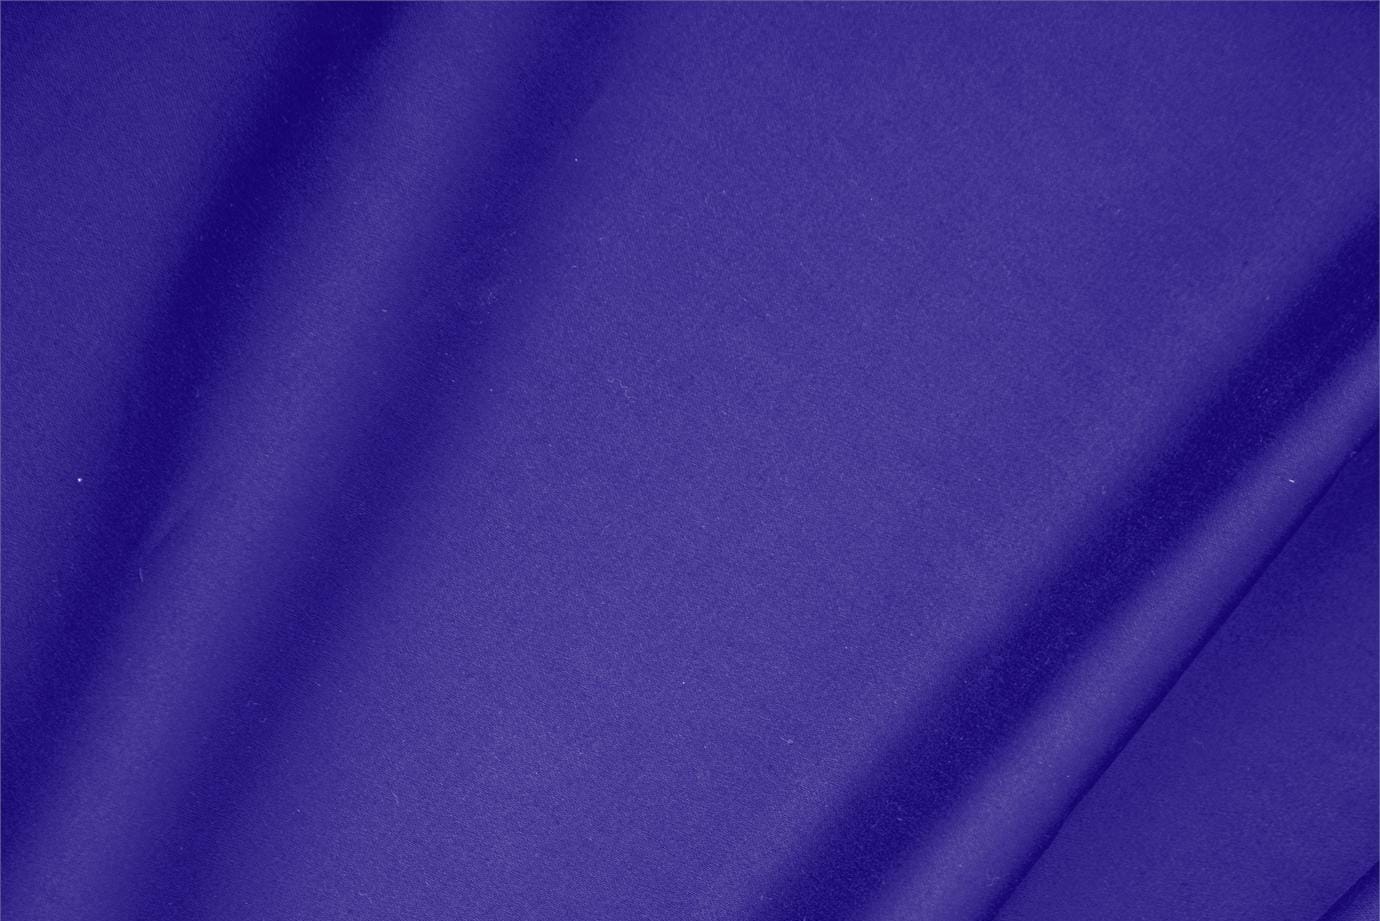 Iris Purple Cotton, Stretch Cotton sateen stretch fabric for dressmaking